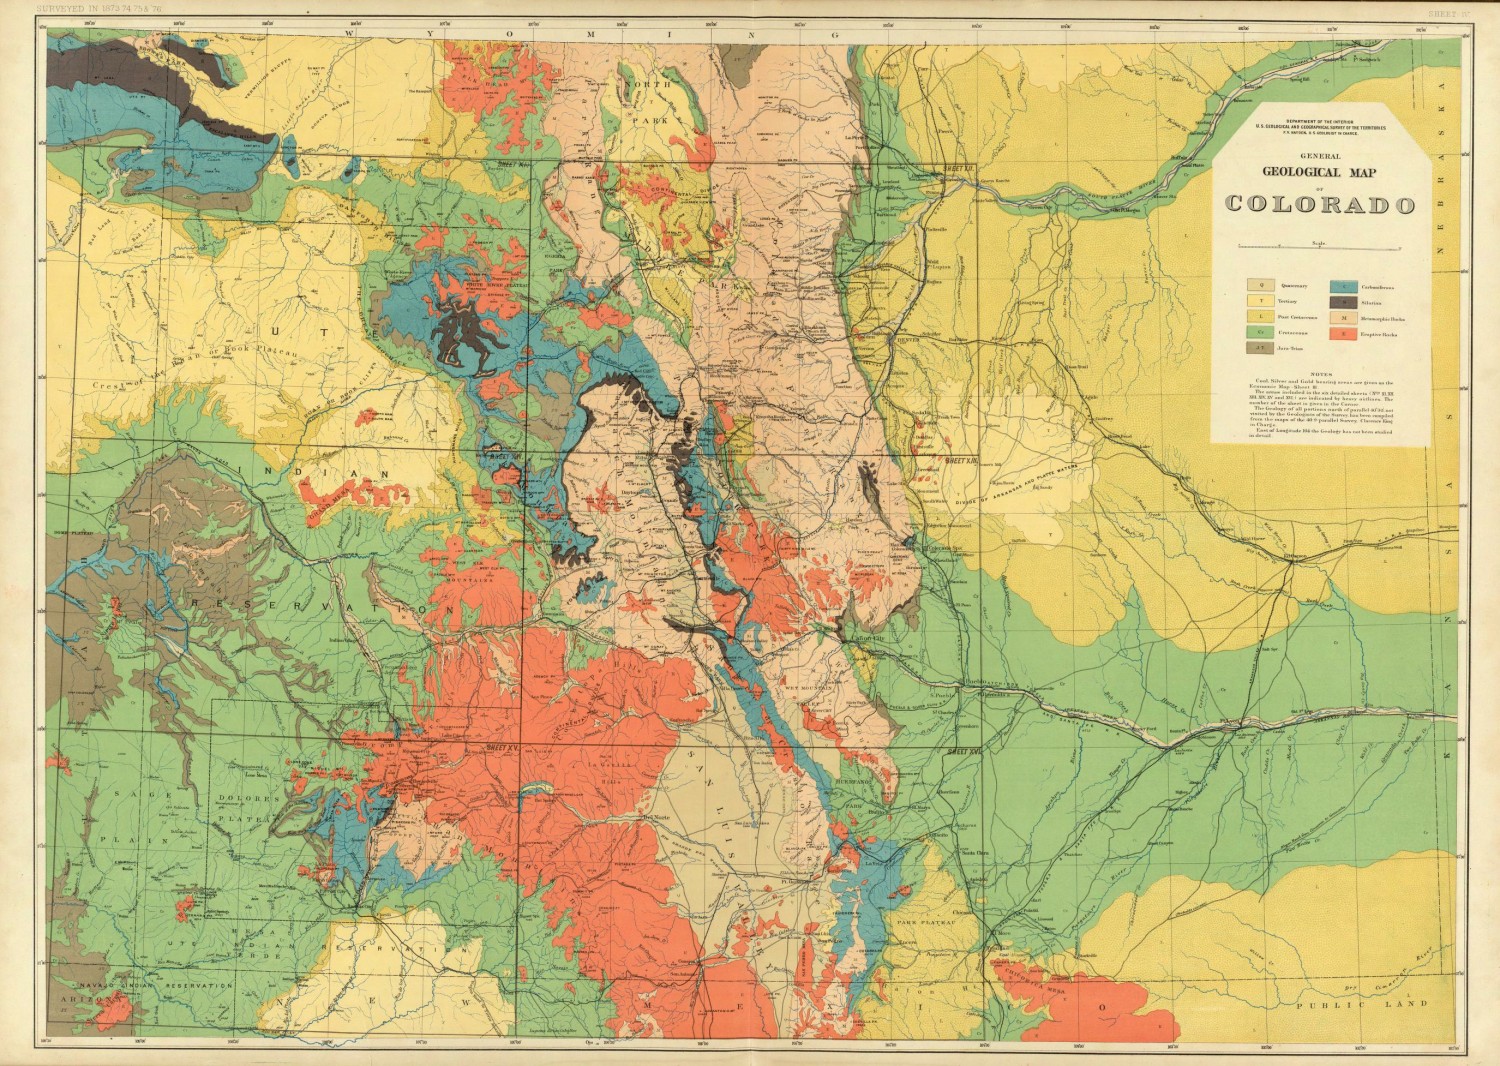 Hayden's General geological map of Colorado